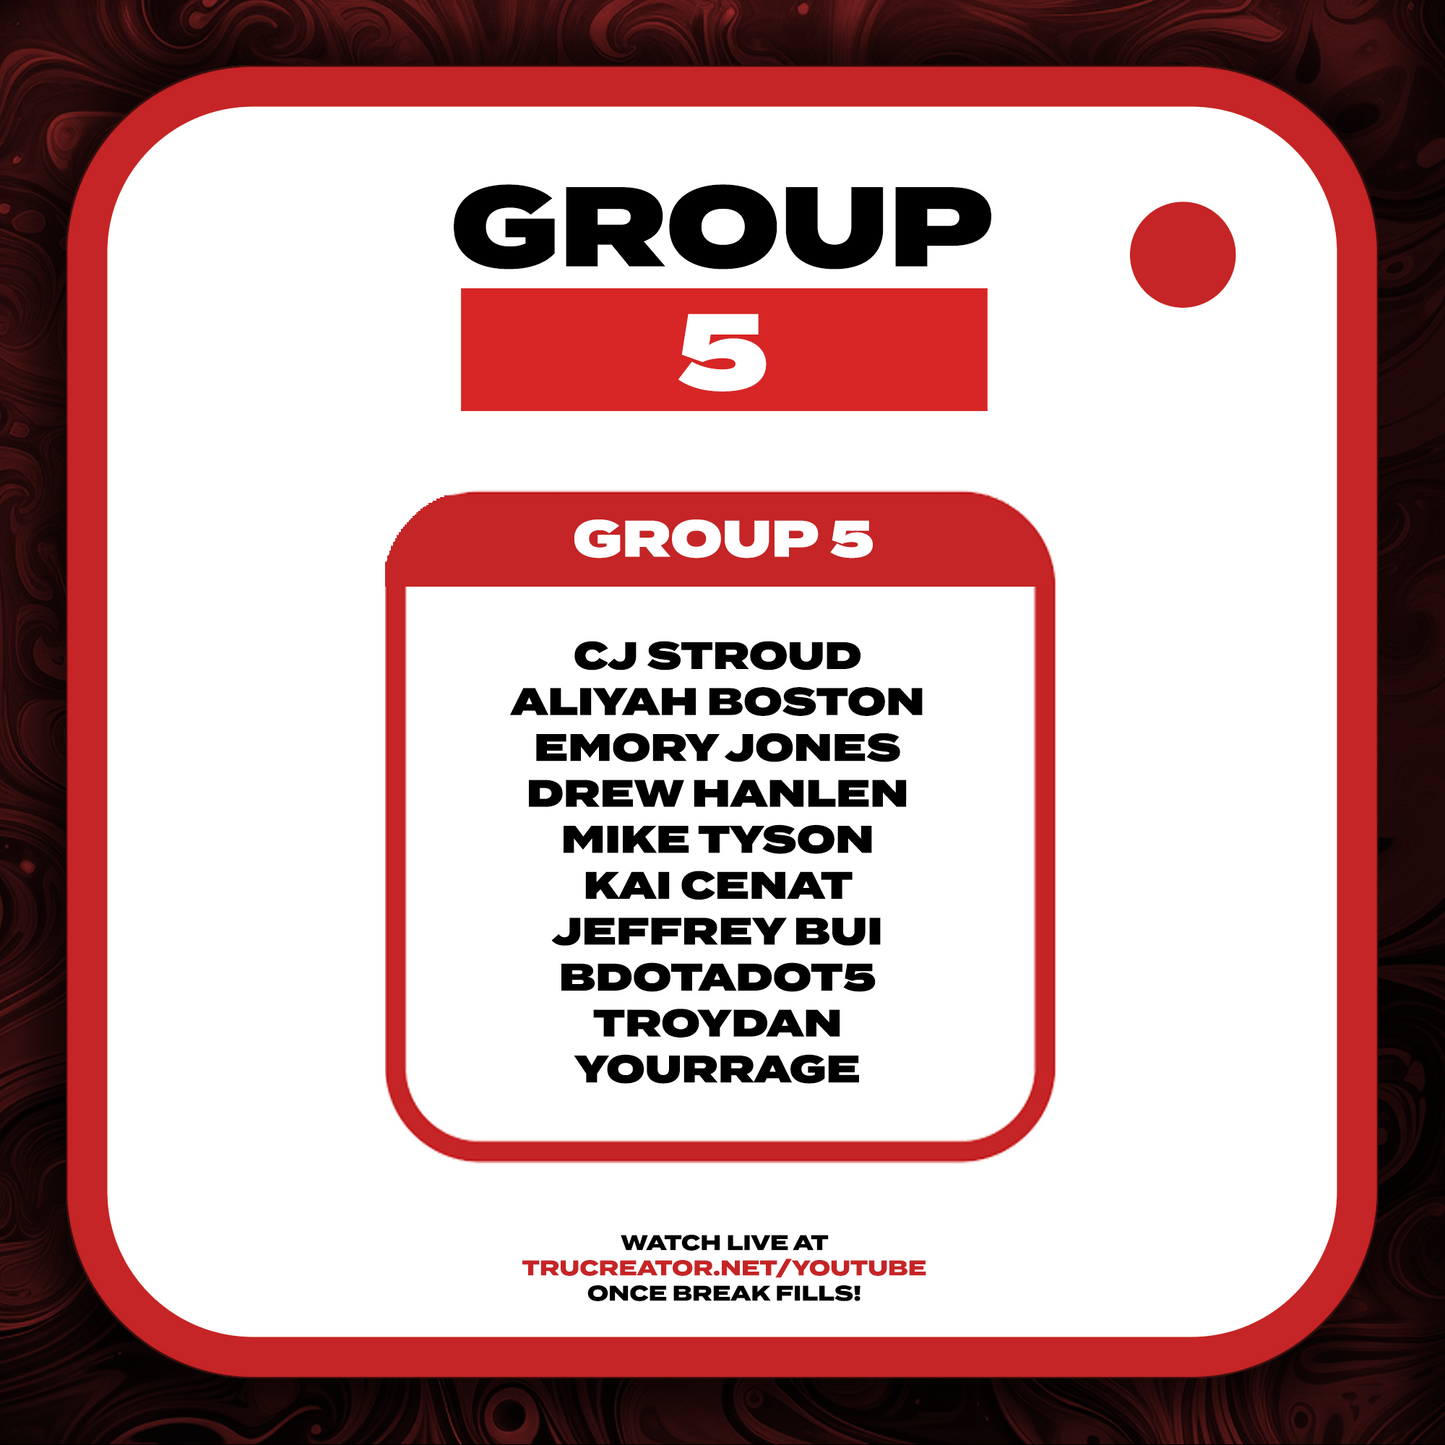 5-Box Mixer - Group 5 (LIVE BREAK)